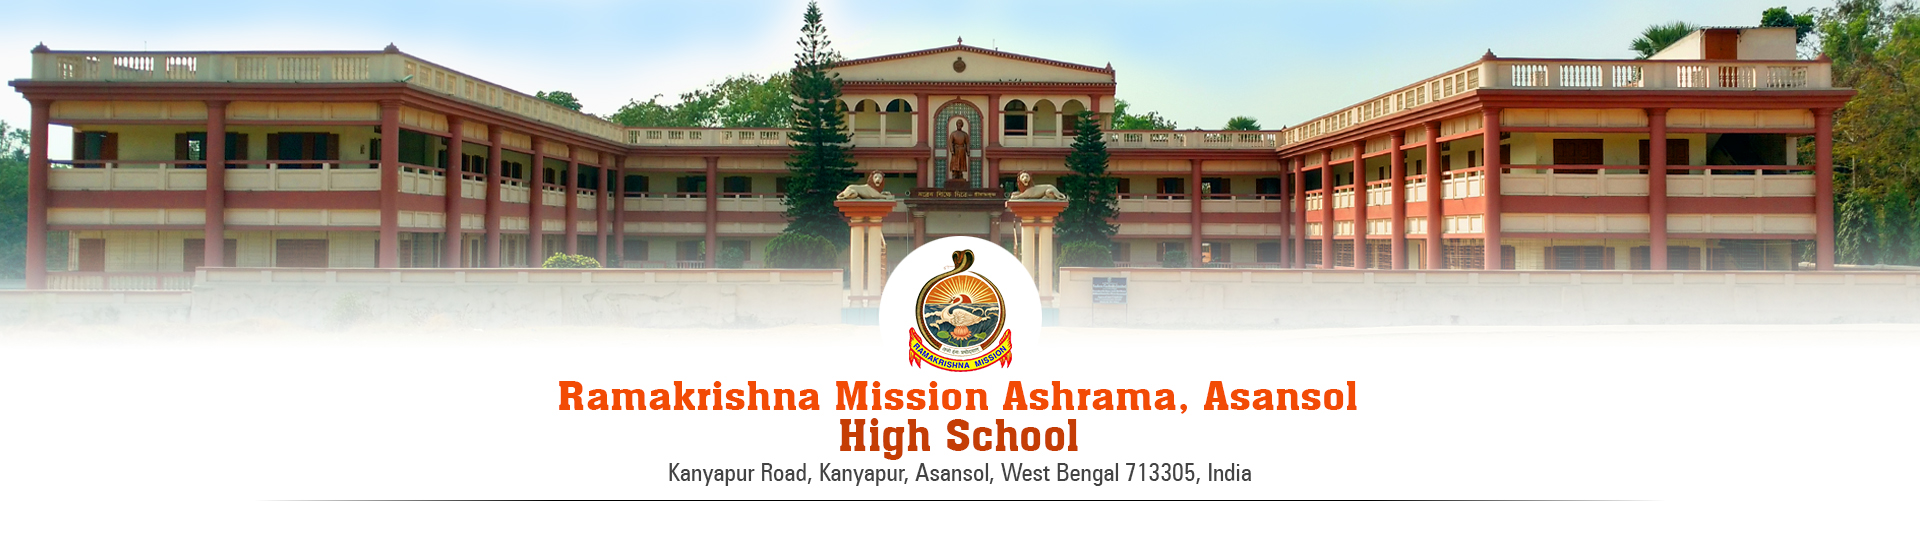 Ramakrishna Mission Ashrama, Asansol